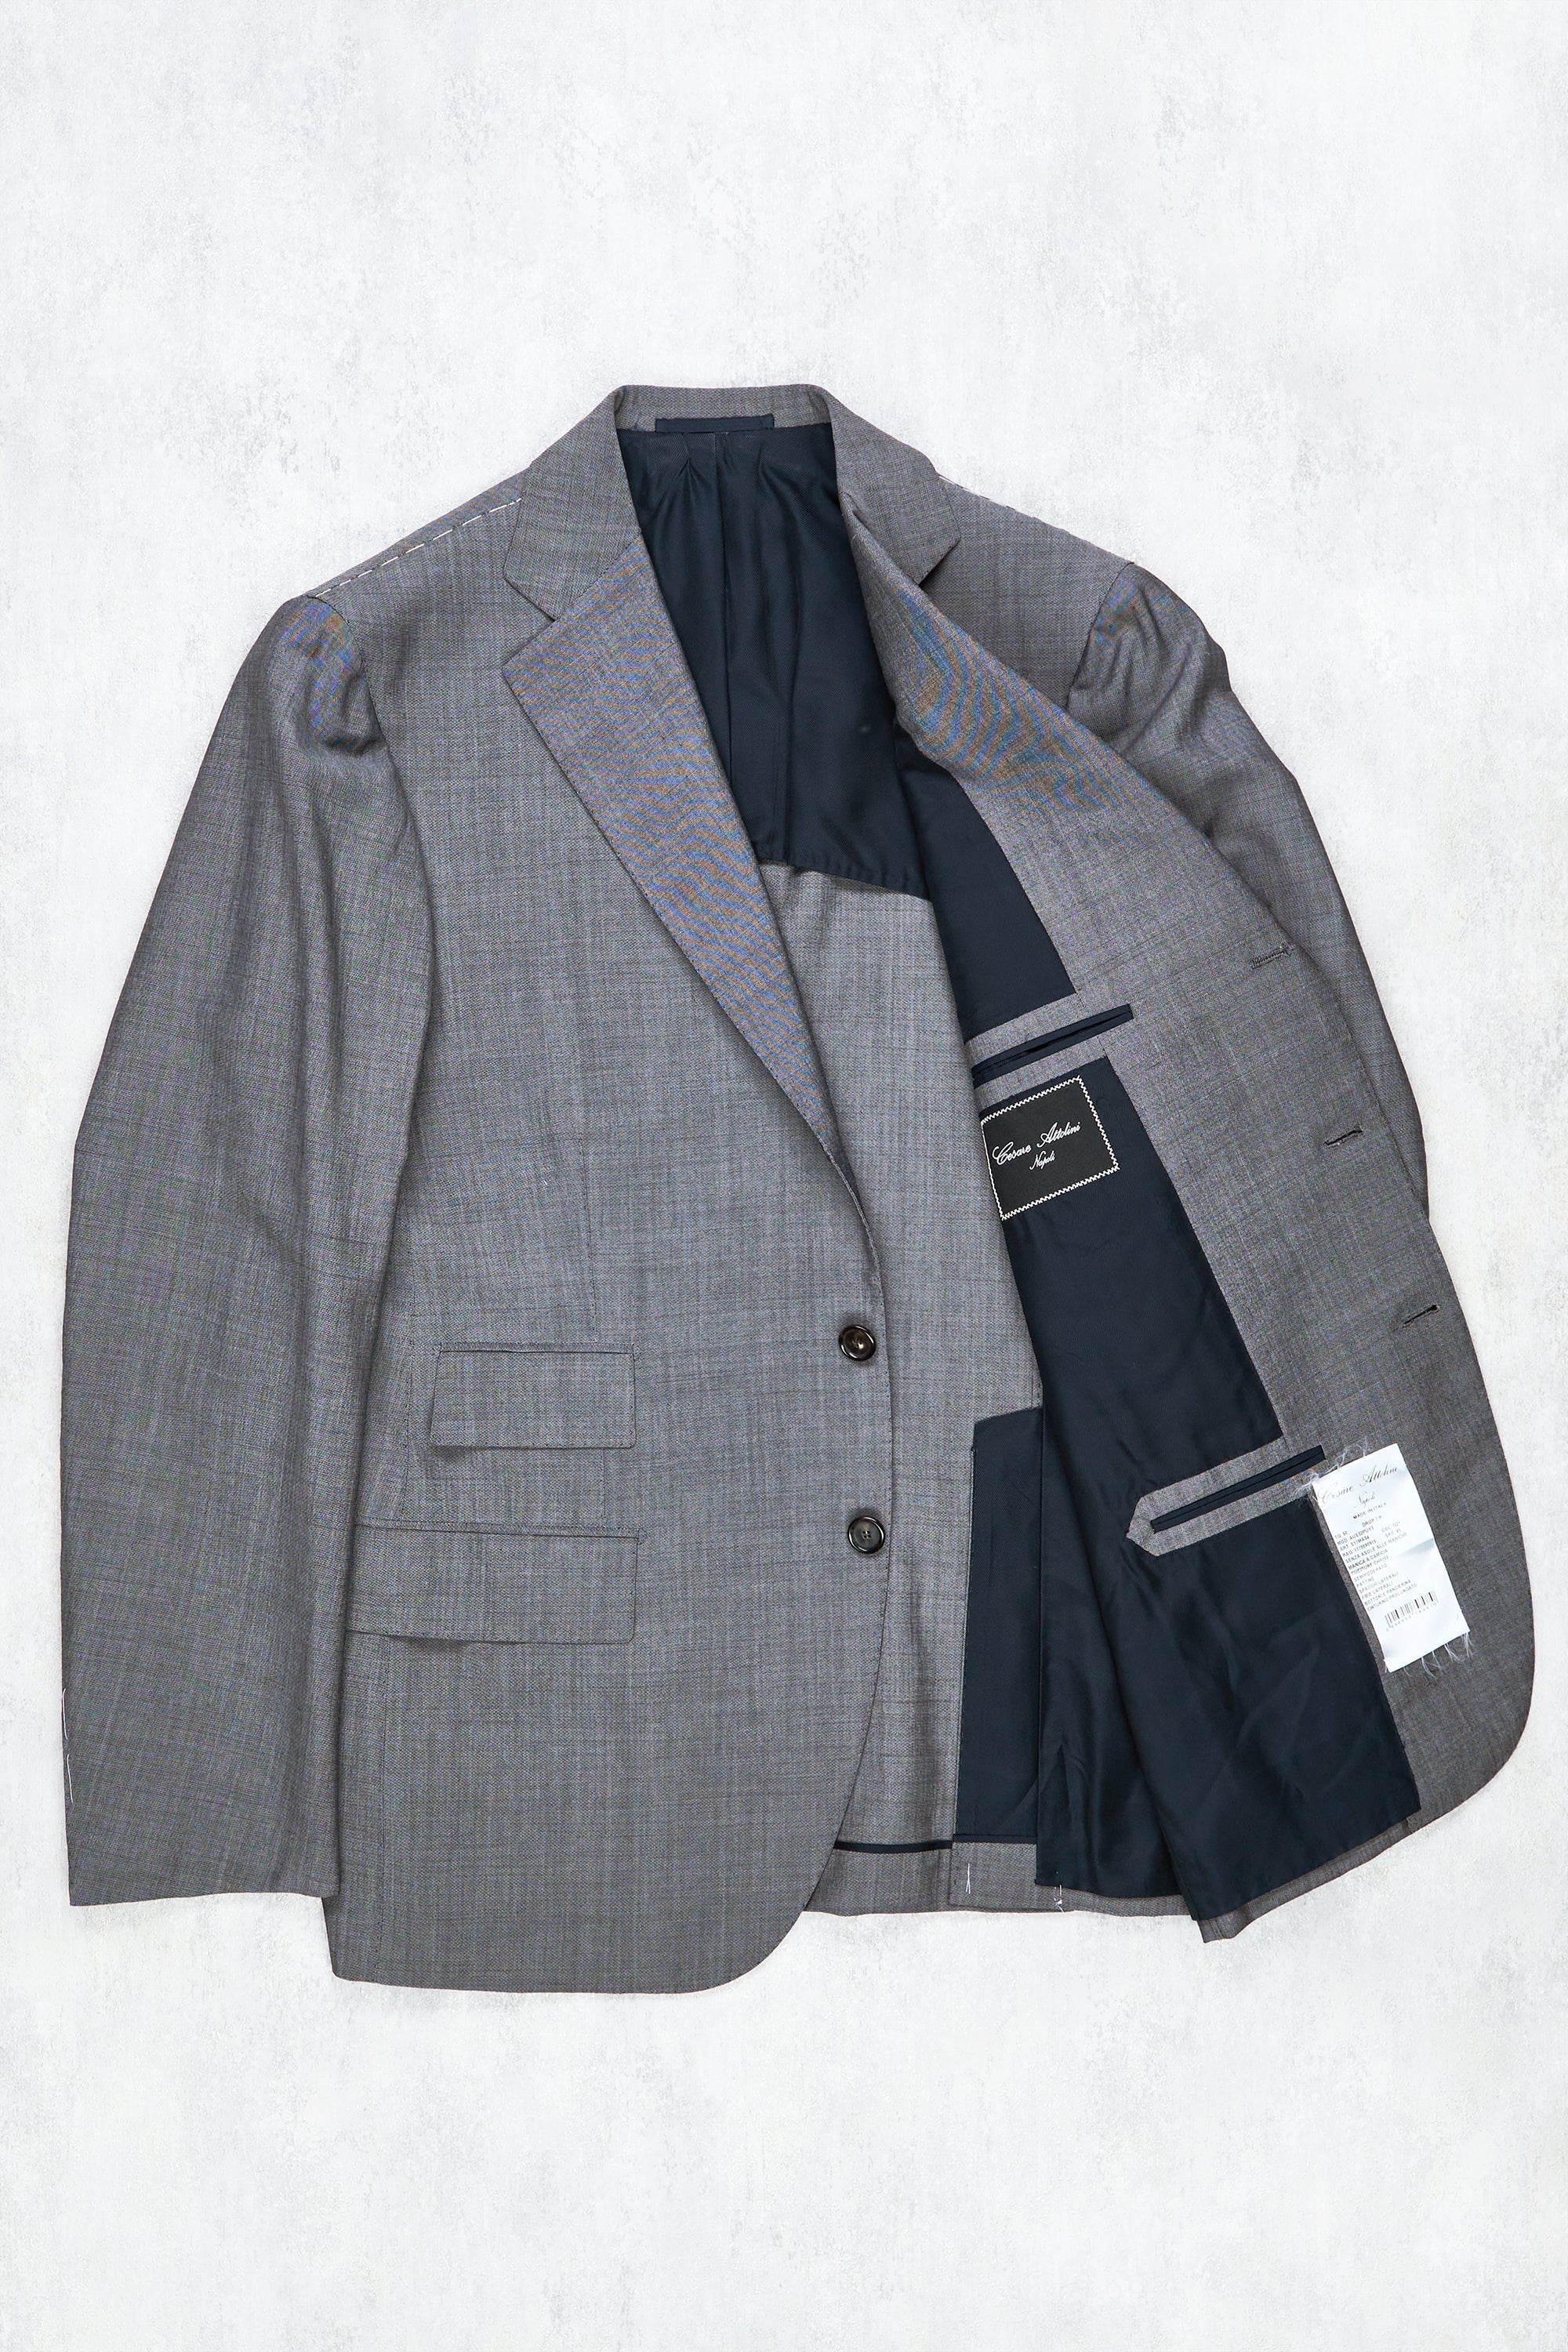 Cesare Attolini Grey Wool/Mohair Suit